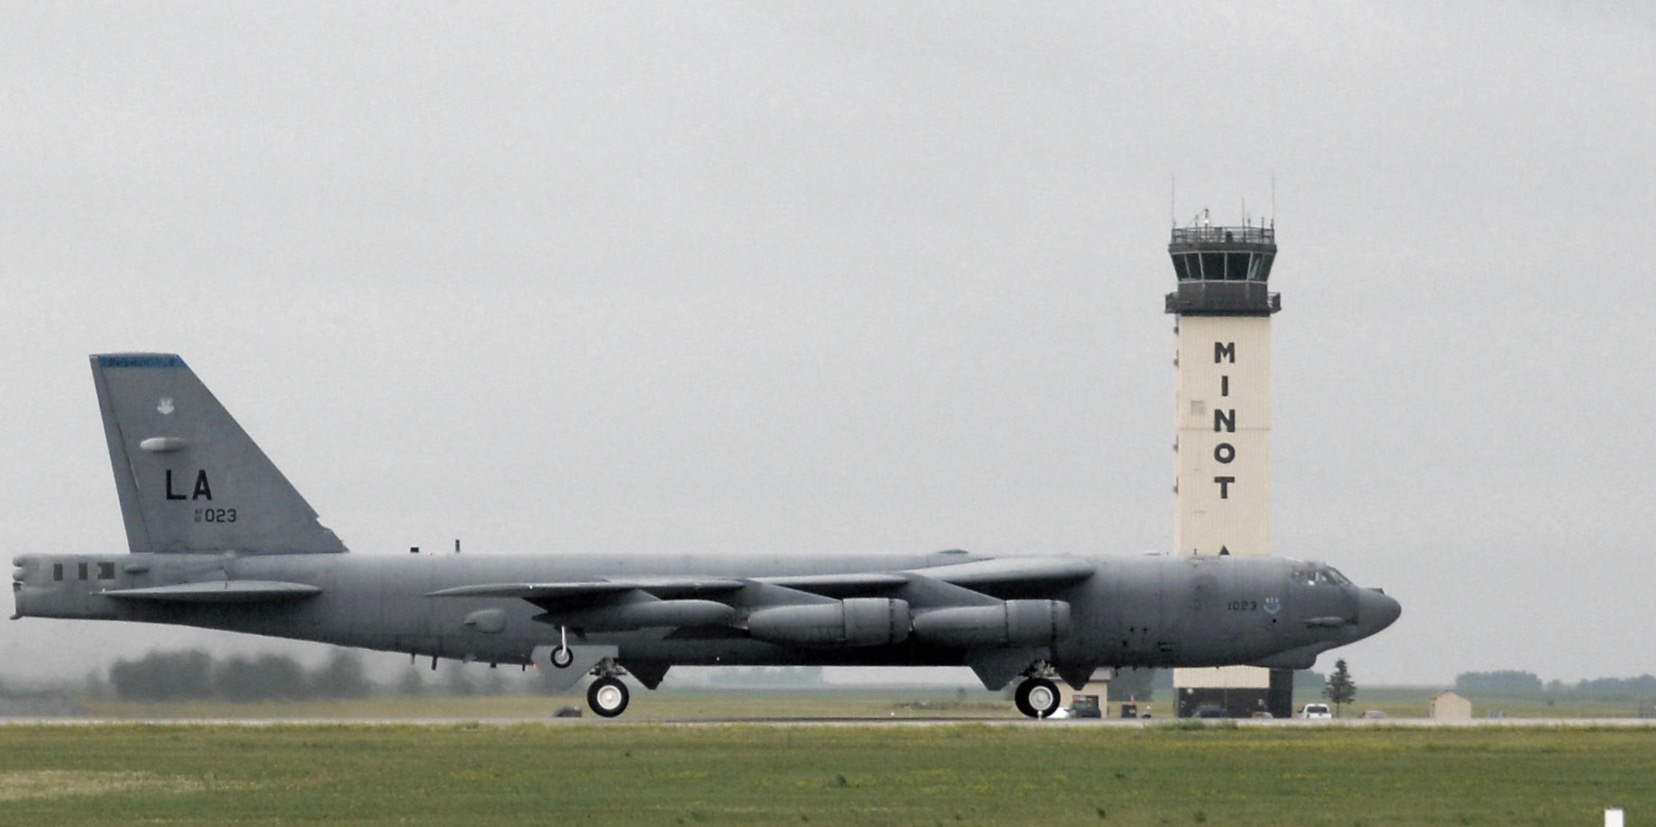 Boeing B-52H-170-BW Stratofortress 61-023 taxiing at Minot Air Force Base, North Dakota. (Senior Airman Cassandra Jones, U.S. Air Force)